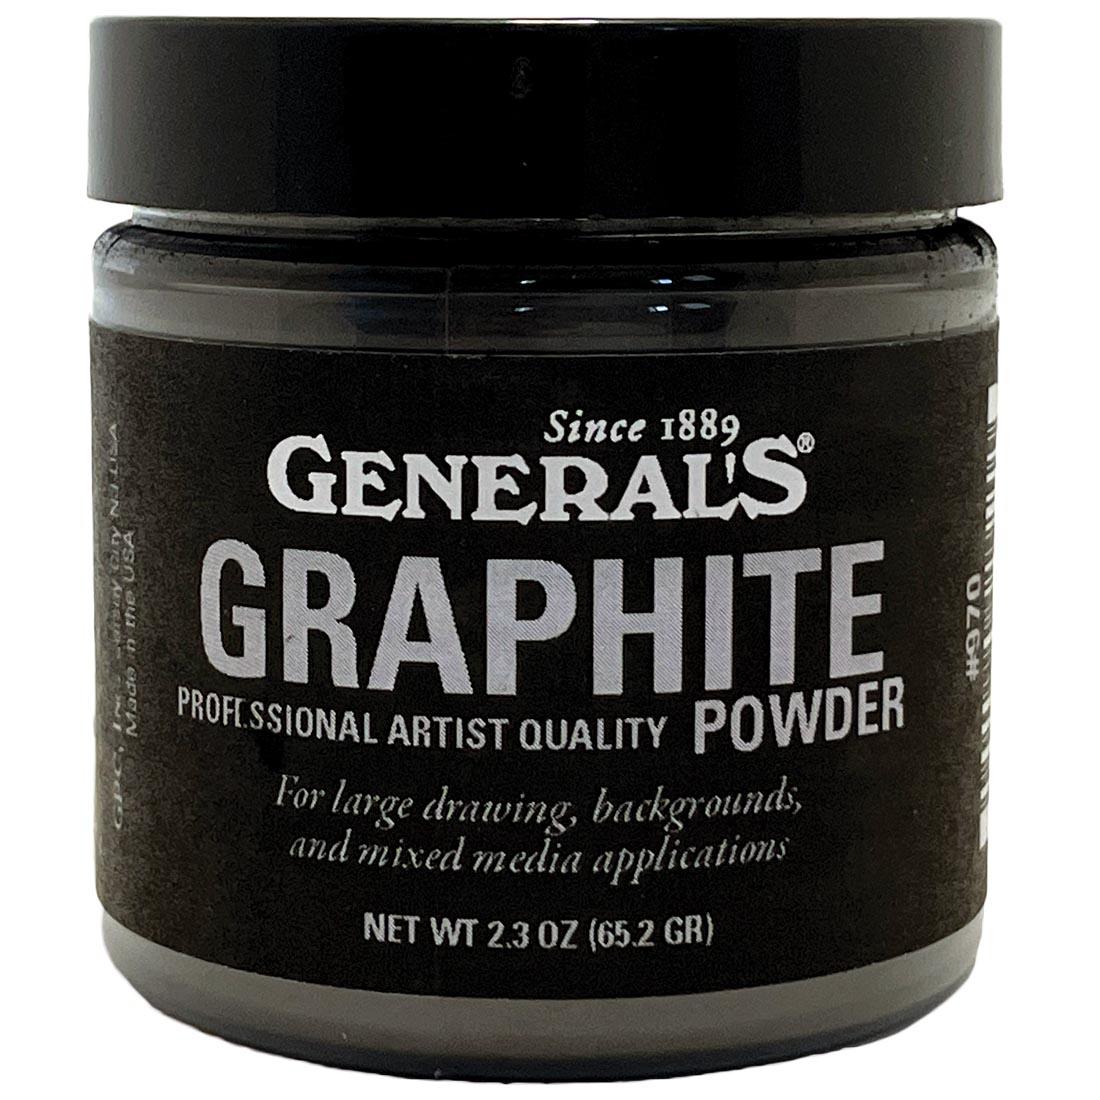 2.3 oz jar of General's Graphite Powder